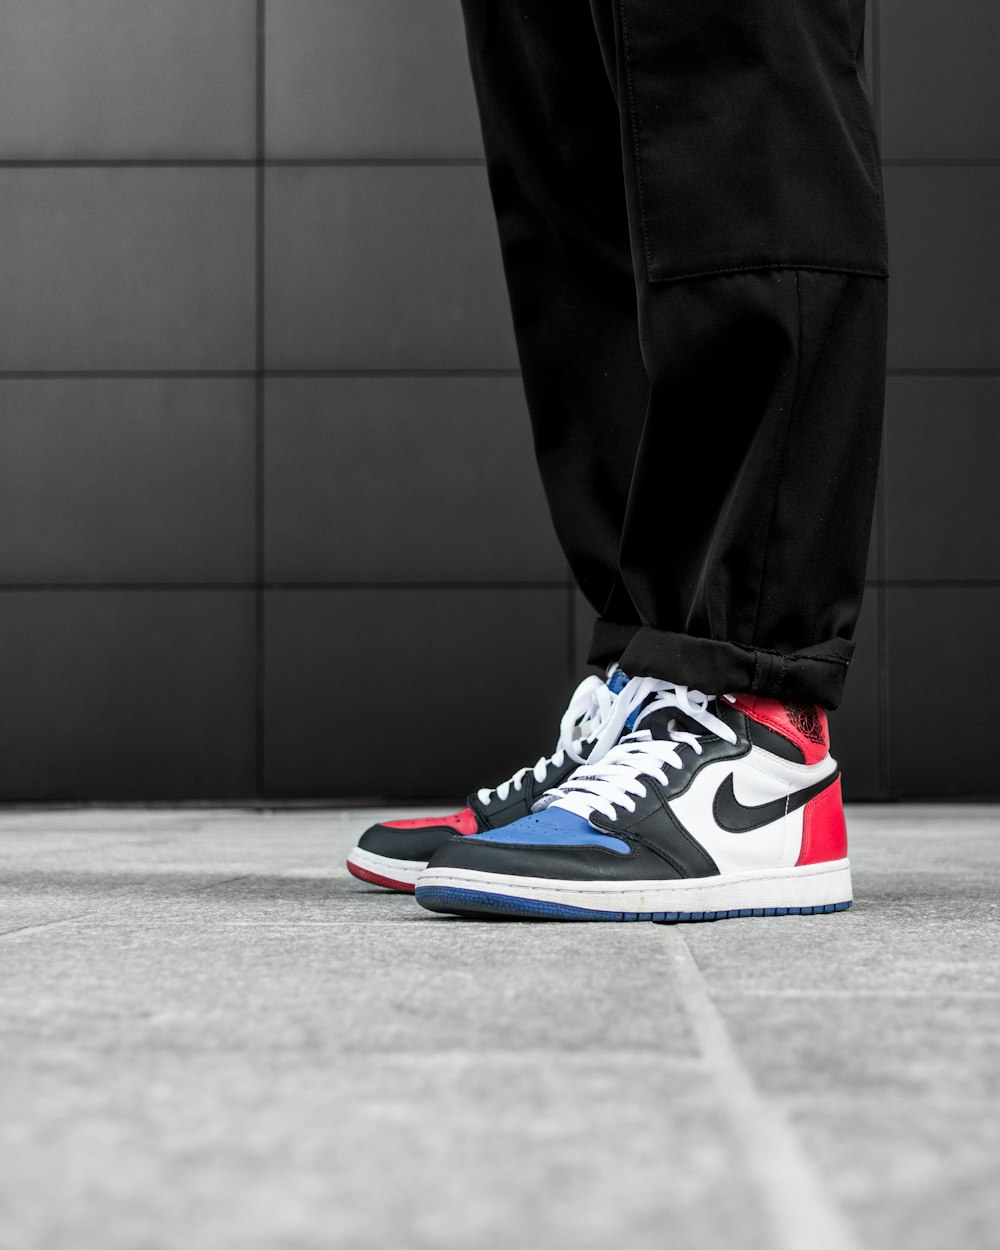 man wears blue-red-and-black Nike Air Jordan 1 shoes photo – Free Apparel  Image on Unsplash